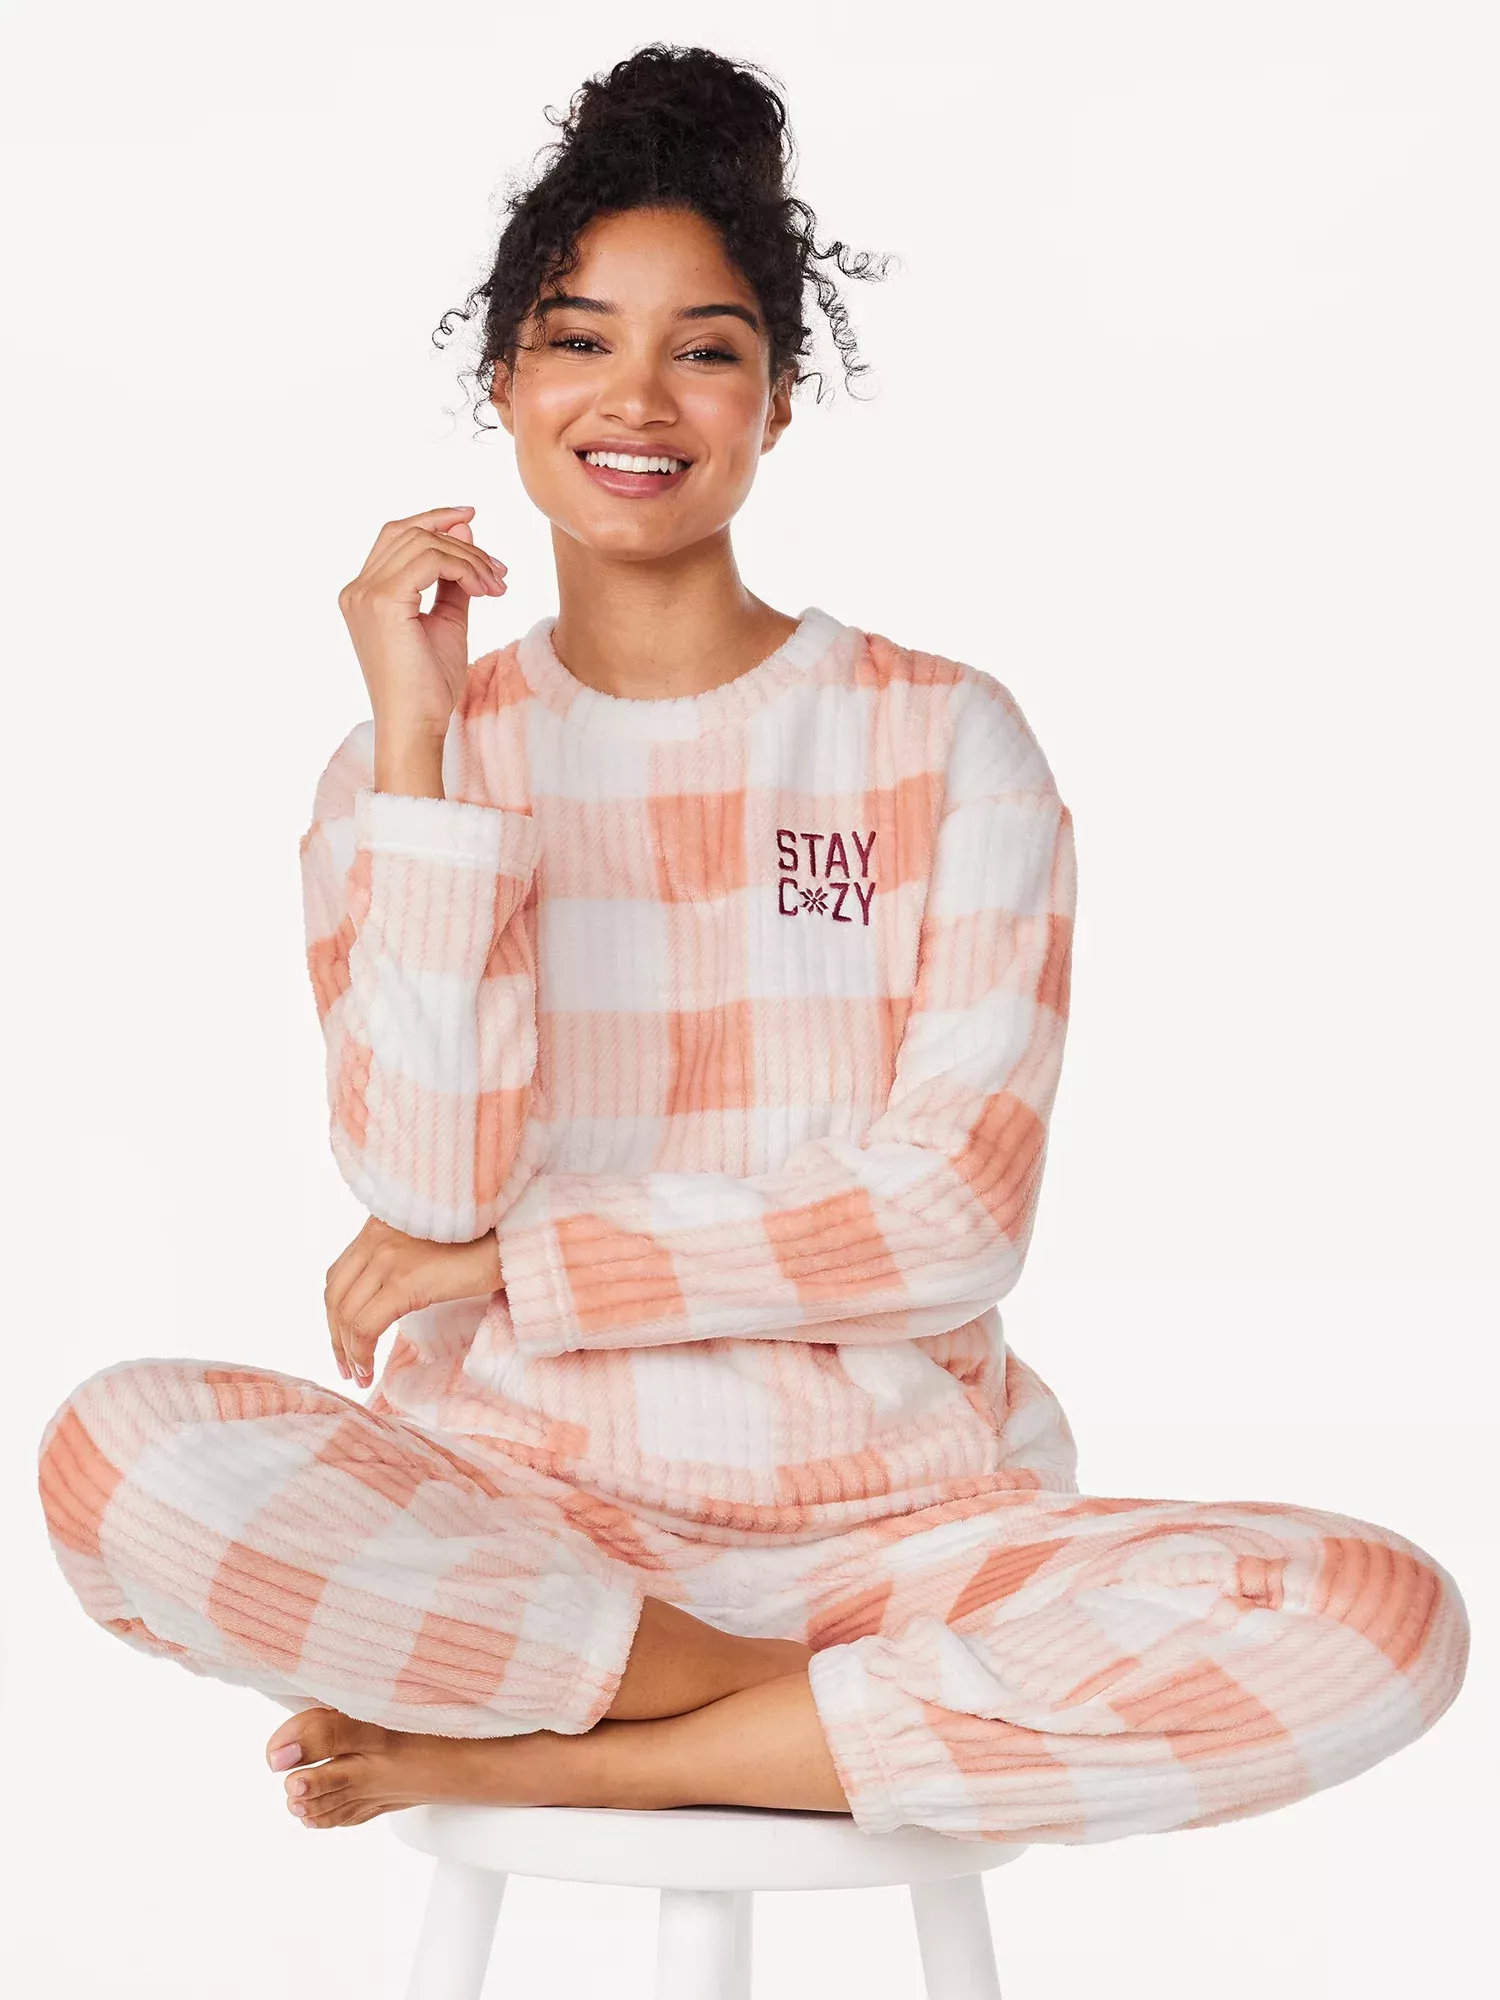 Joyspun Women's Long Sleeve Flannel Sleep Top and Pants Pajama Set,  2-Piece, Sizes XS to 3X